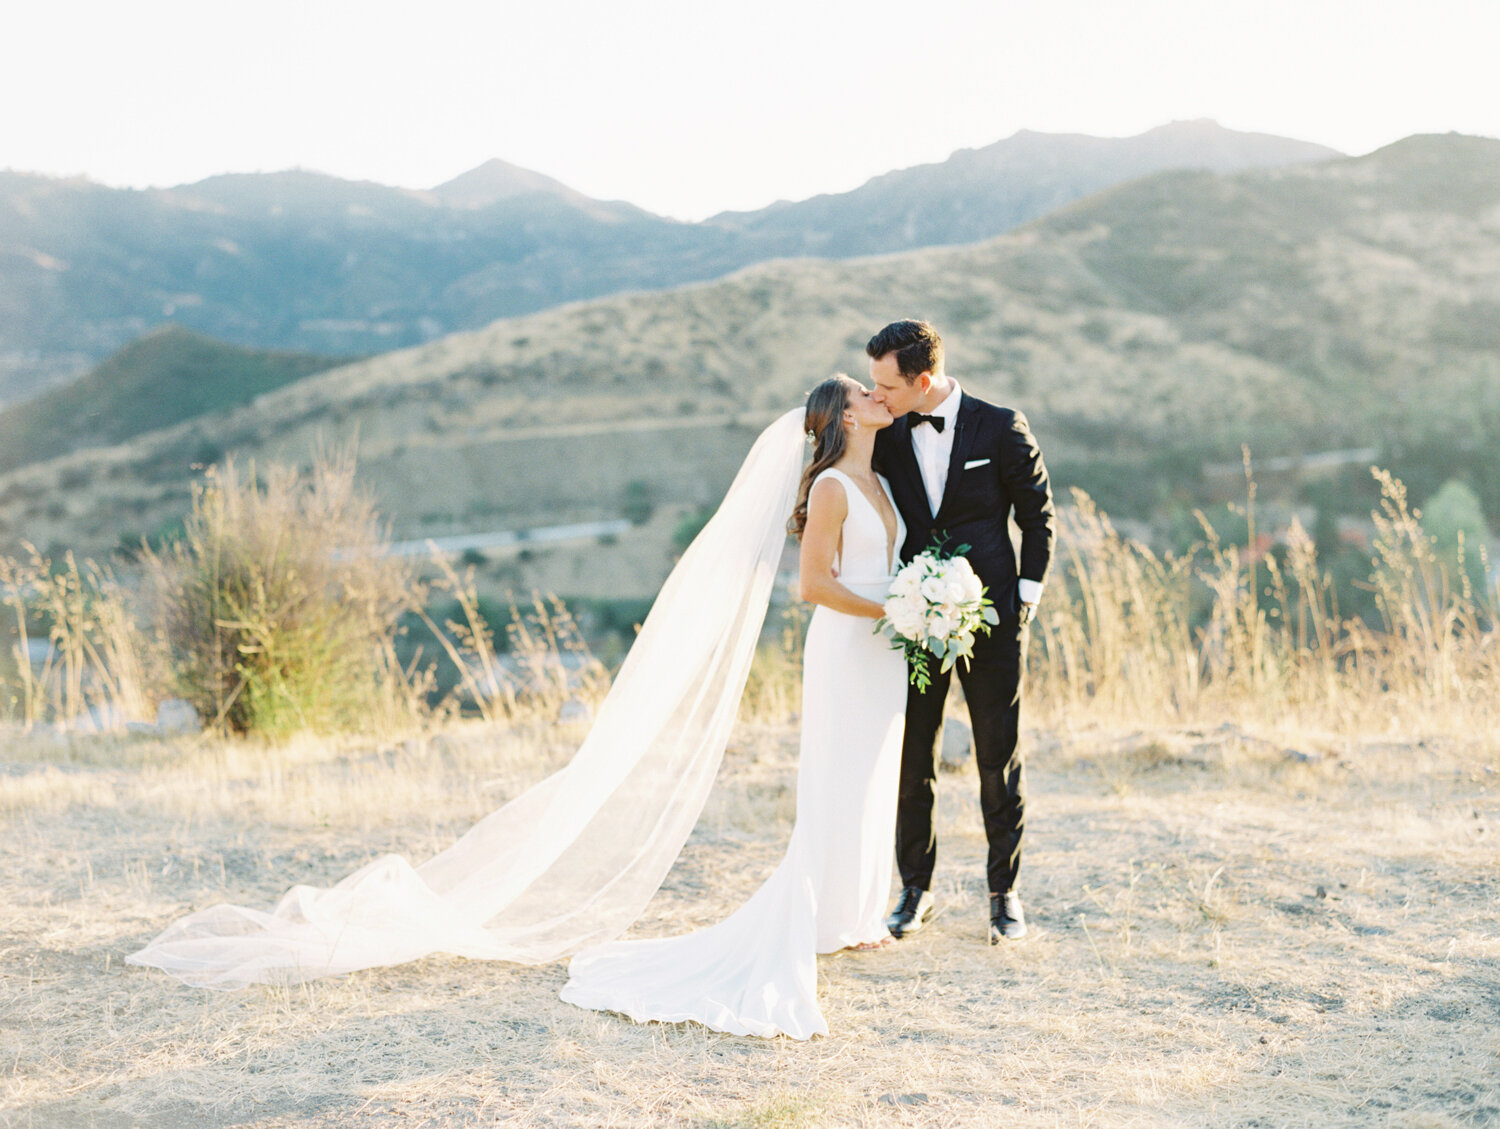 wisteria-photography.com | Wisteria Photography | Triunfo Creek Vineyards | Weddings Engagement | Southern California Photographer-26.jpg